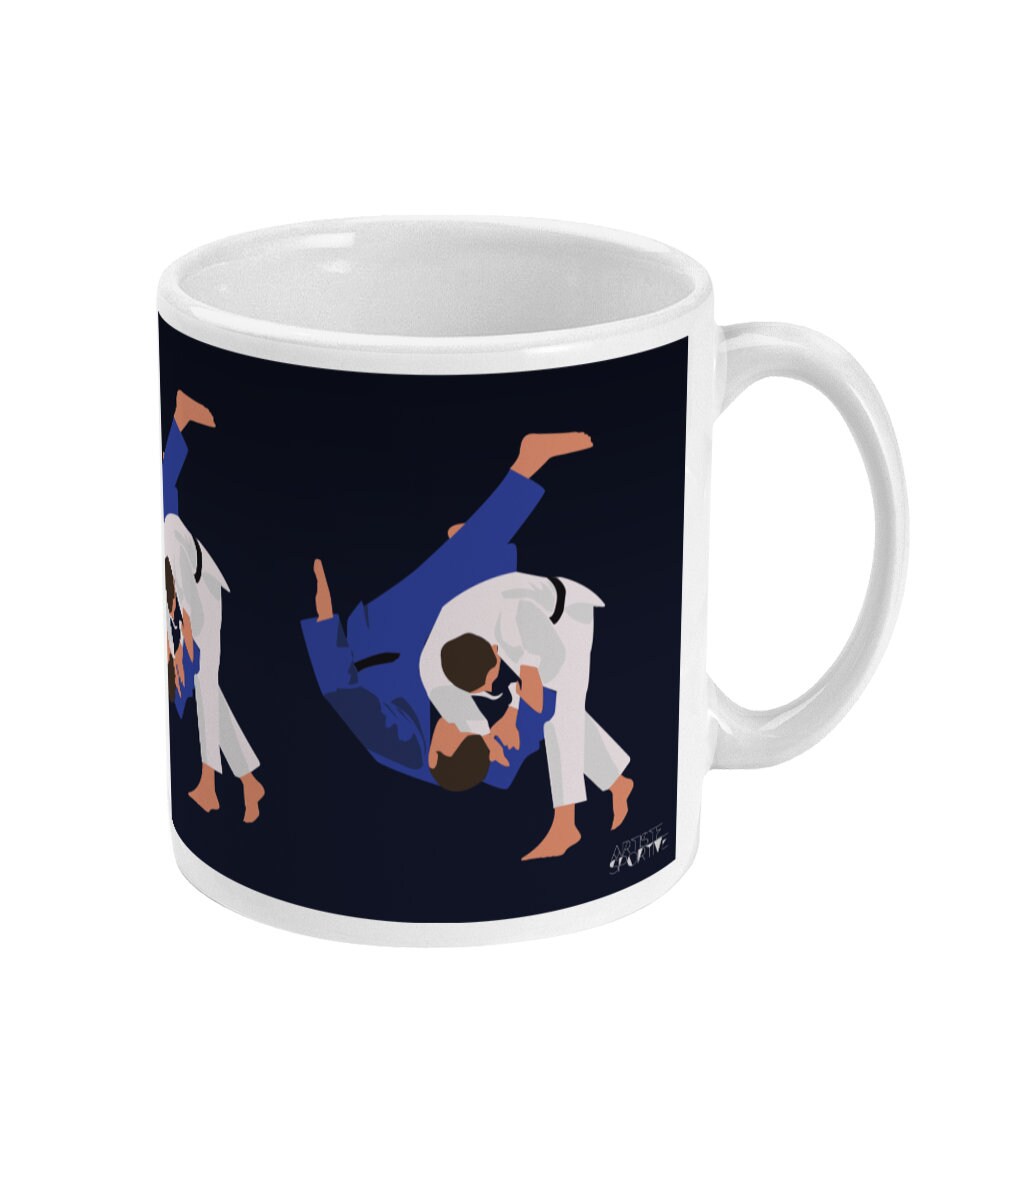 Judo cup or mug "The judoka" - Customizable